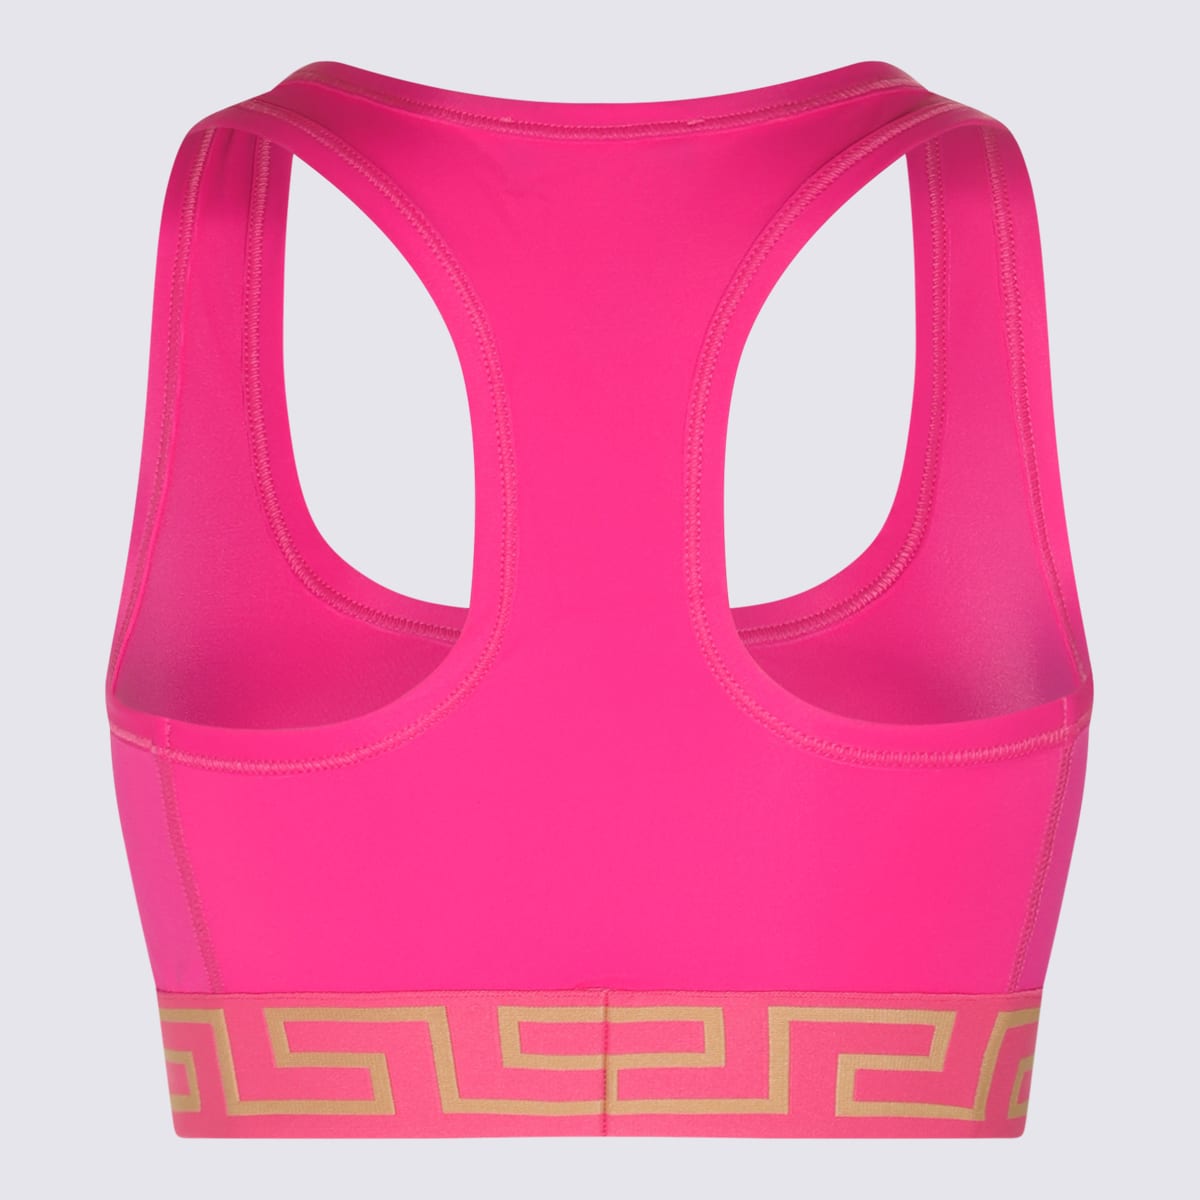 Shop Versace Pink Sport Top In Waterlily